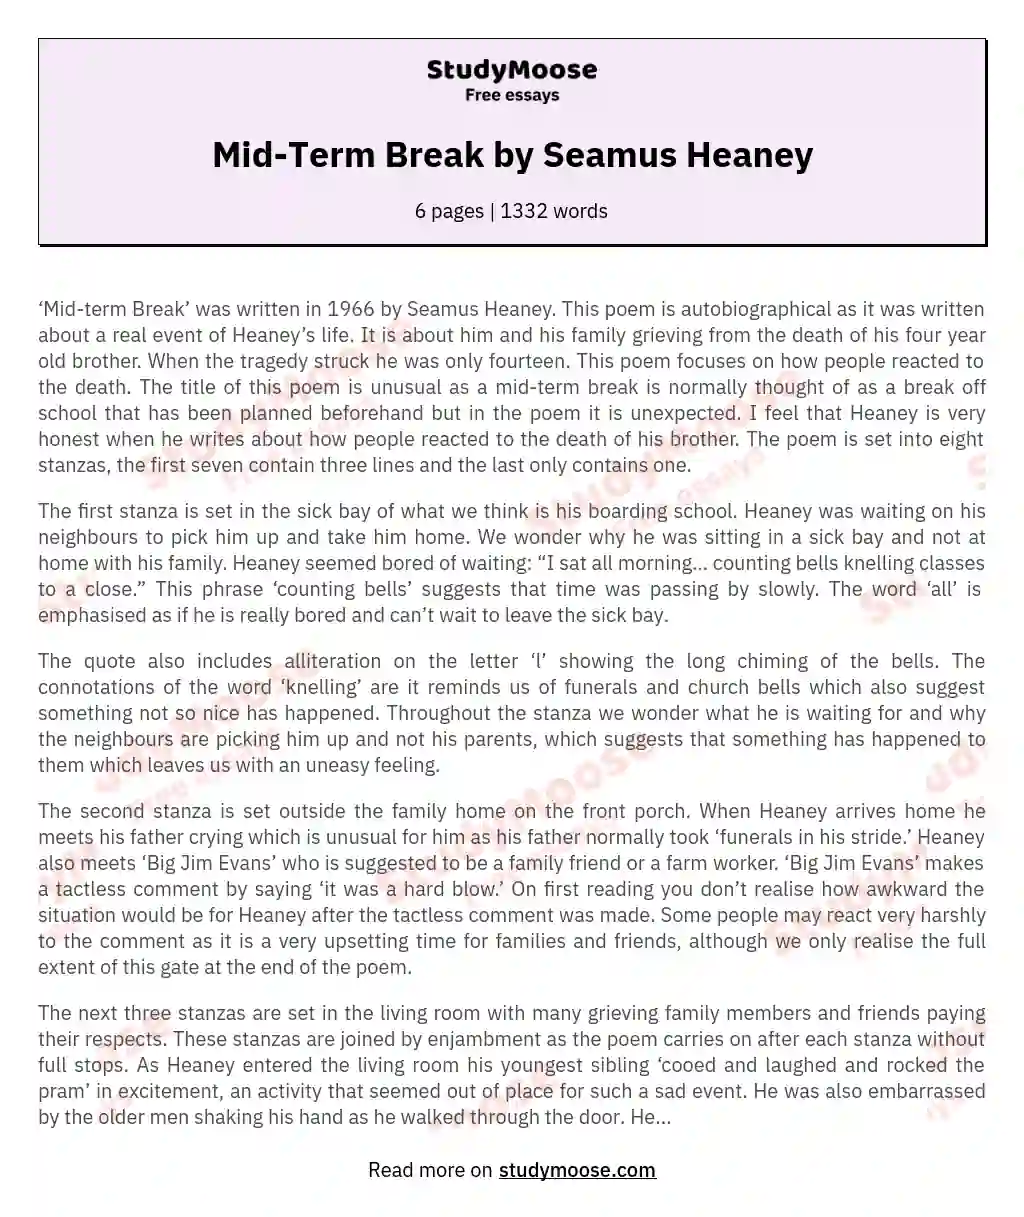 Mid-Term Break by Seamus Heaney